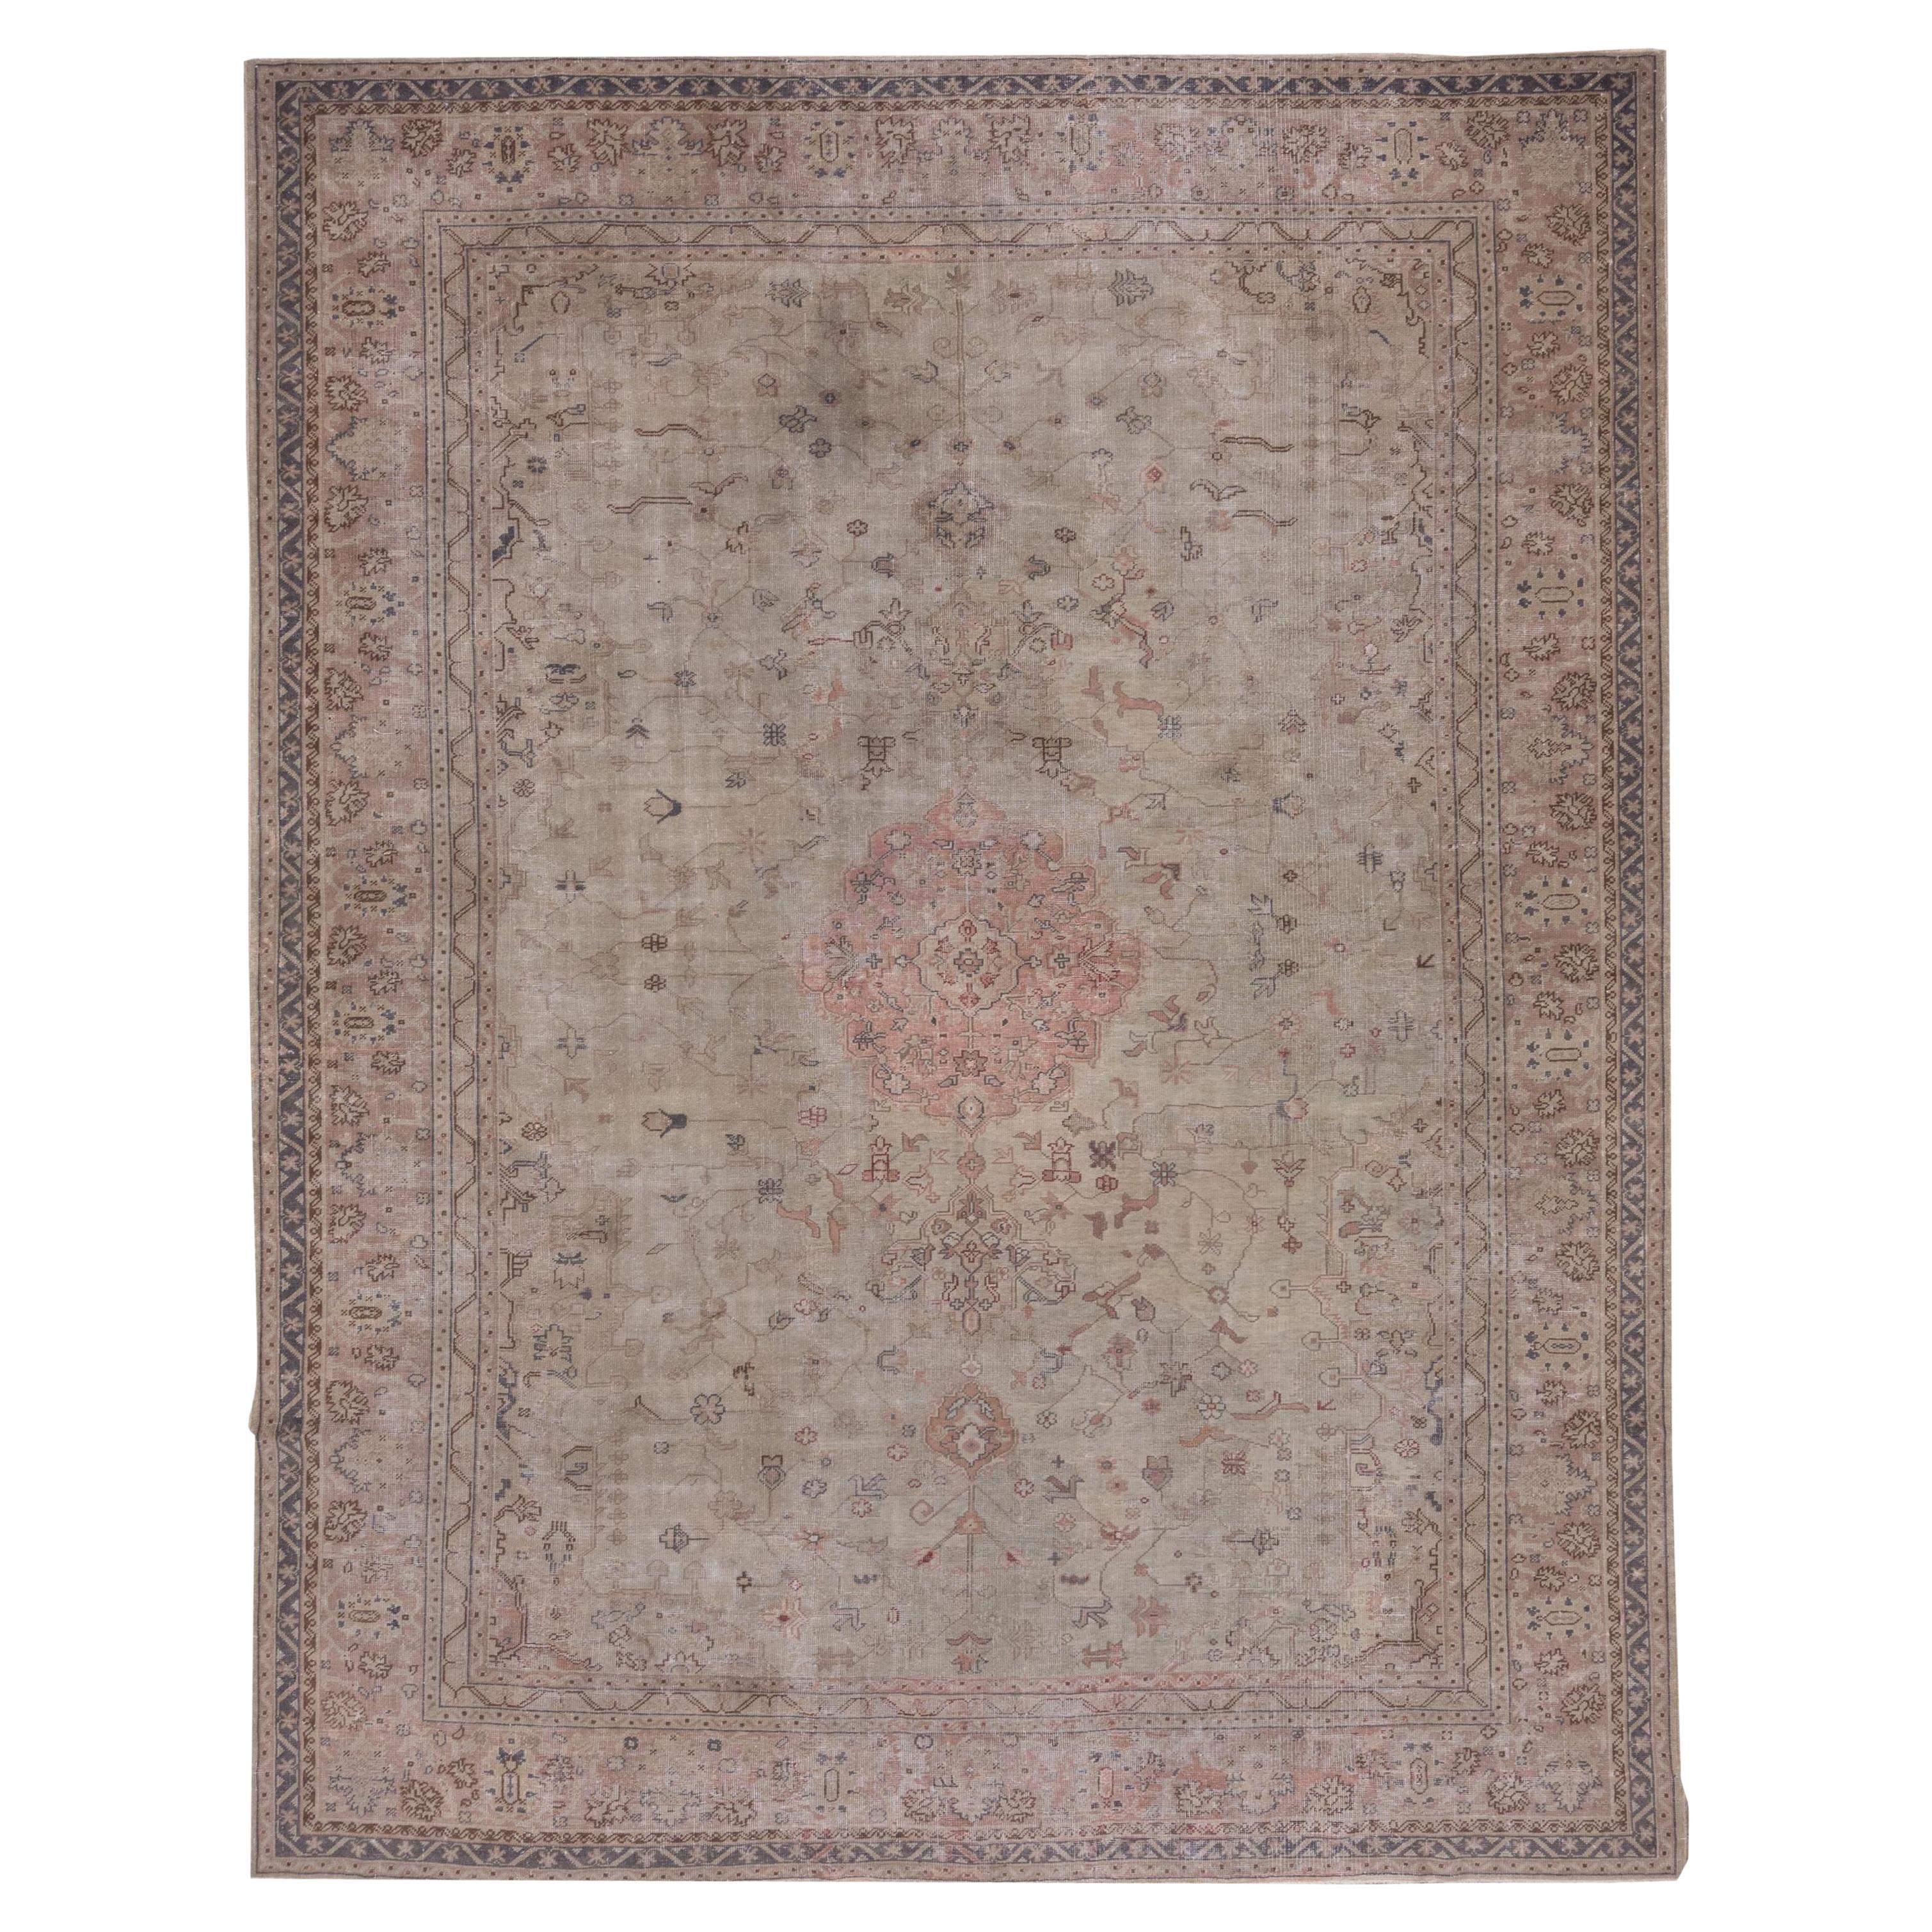 Antiker türkischer Sivas-Teppich, Salbeigrünes Feld, Mittelmedaillon, rosa Bordüren